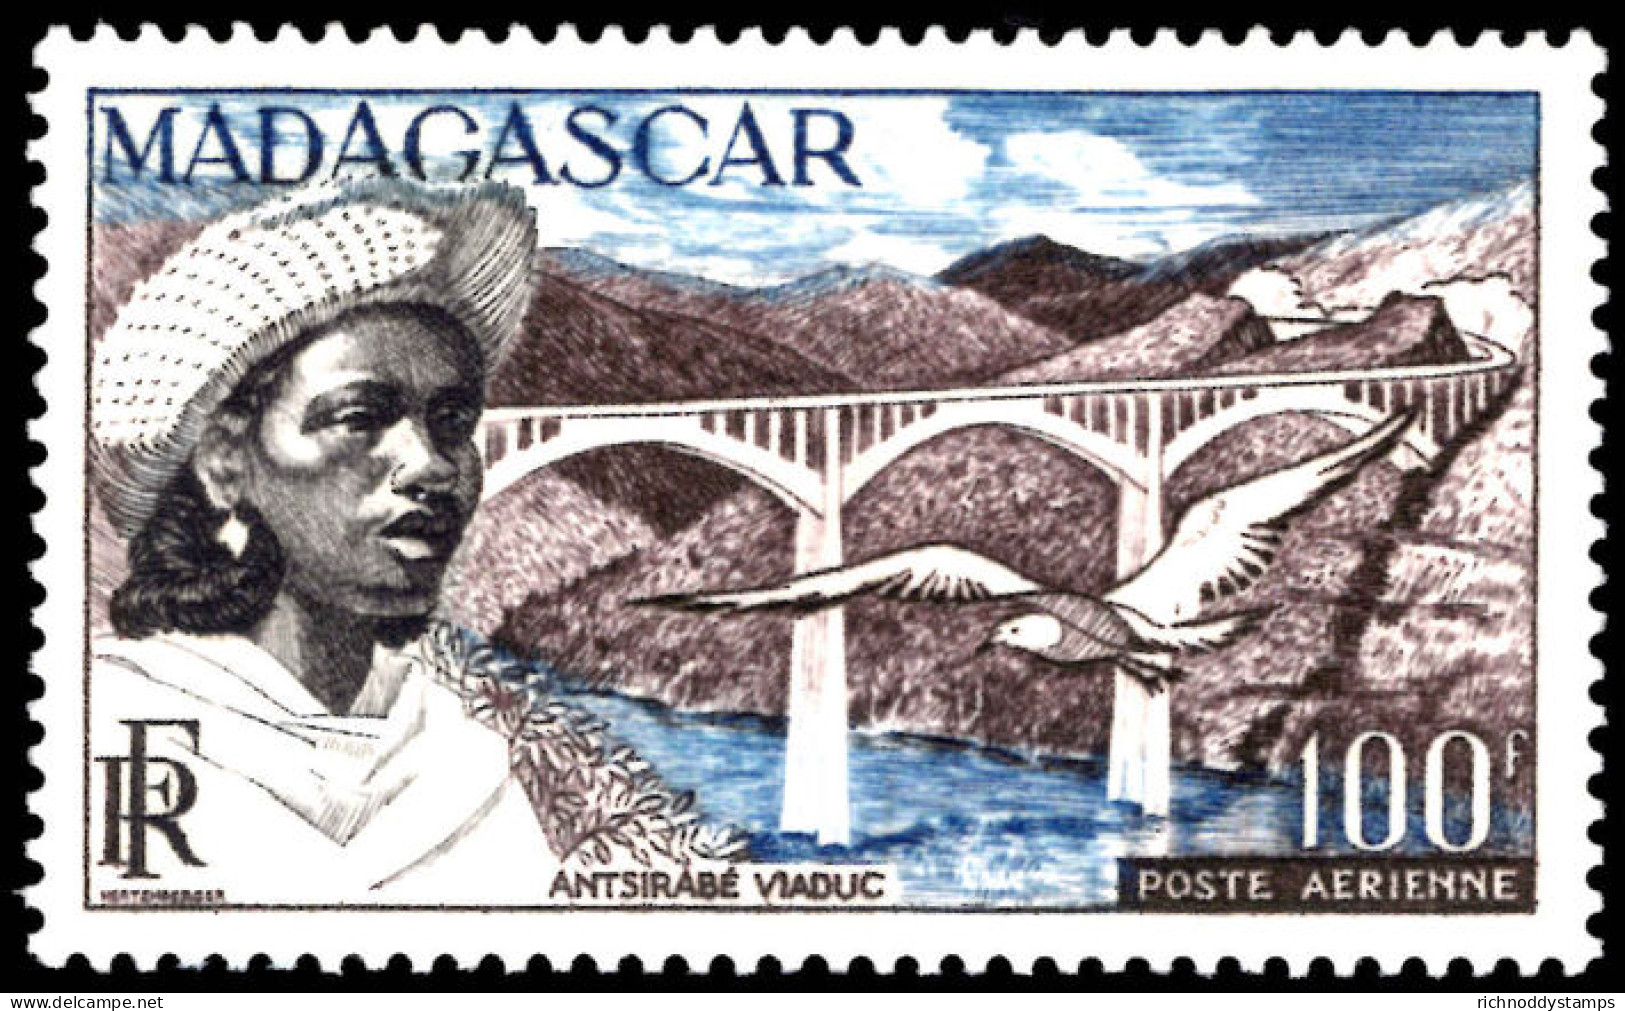 Madagascar 1952 100f Antsirabe Viaduct Unmounted Mint. - Unused Stamps